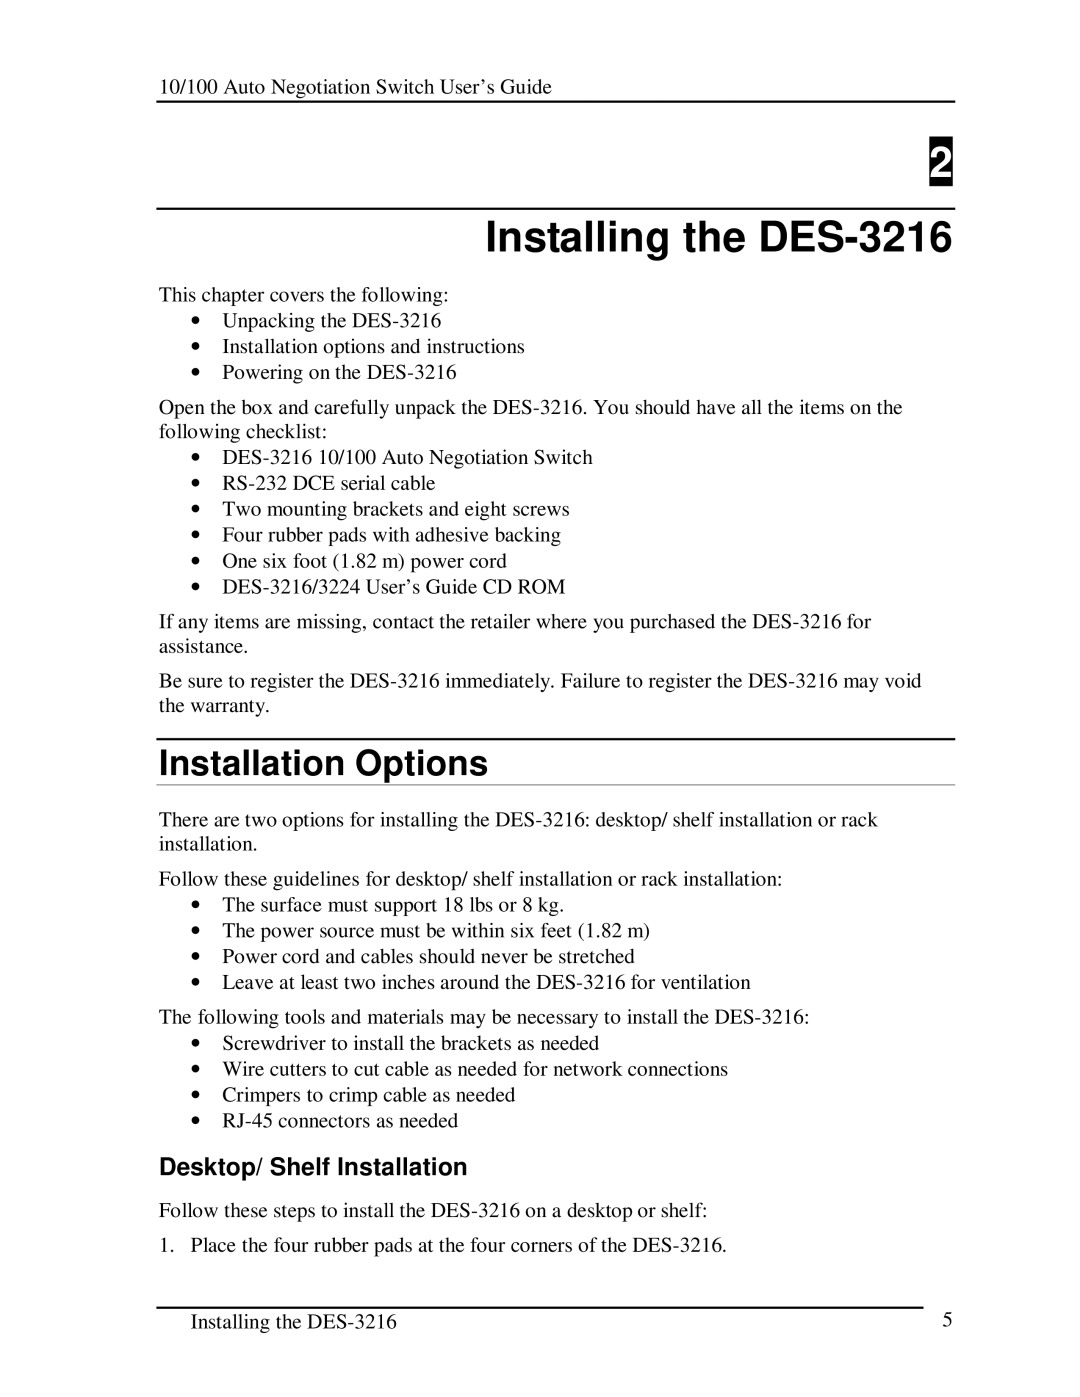 D-Link manual Installing the DES-3216, Installation Options, Desktop/ Shelf Installation 